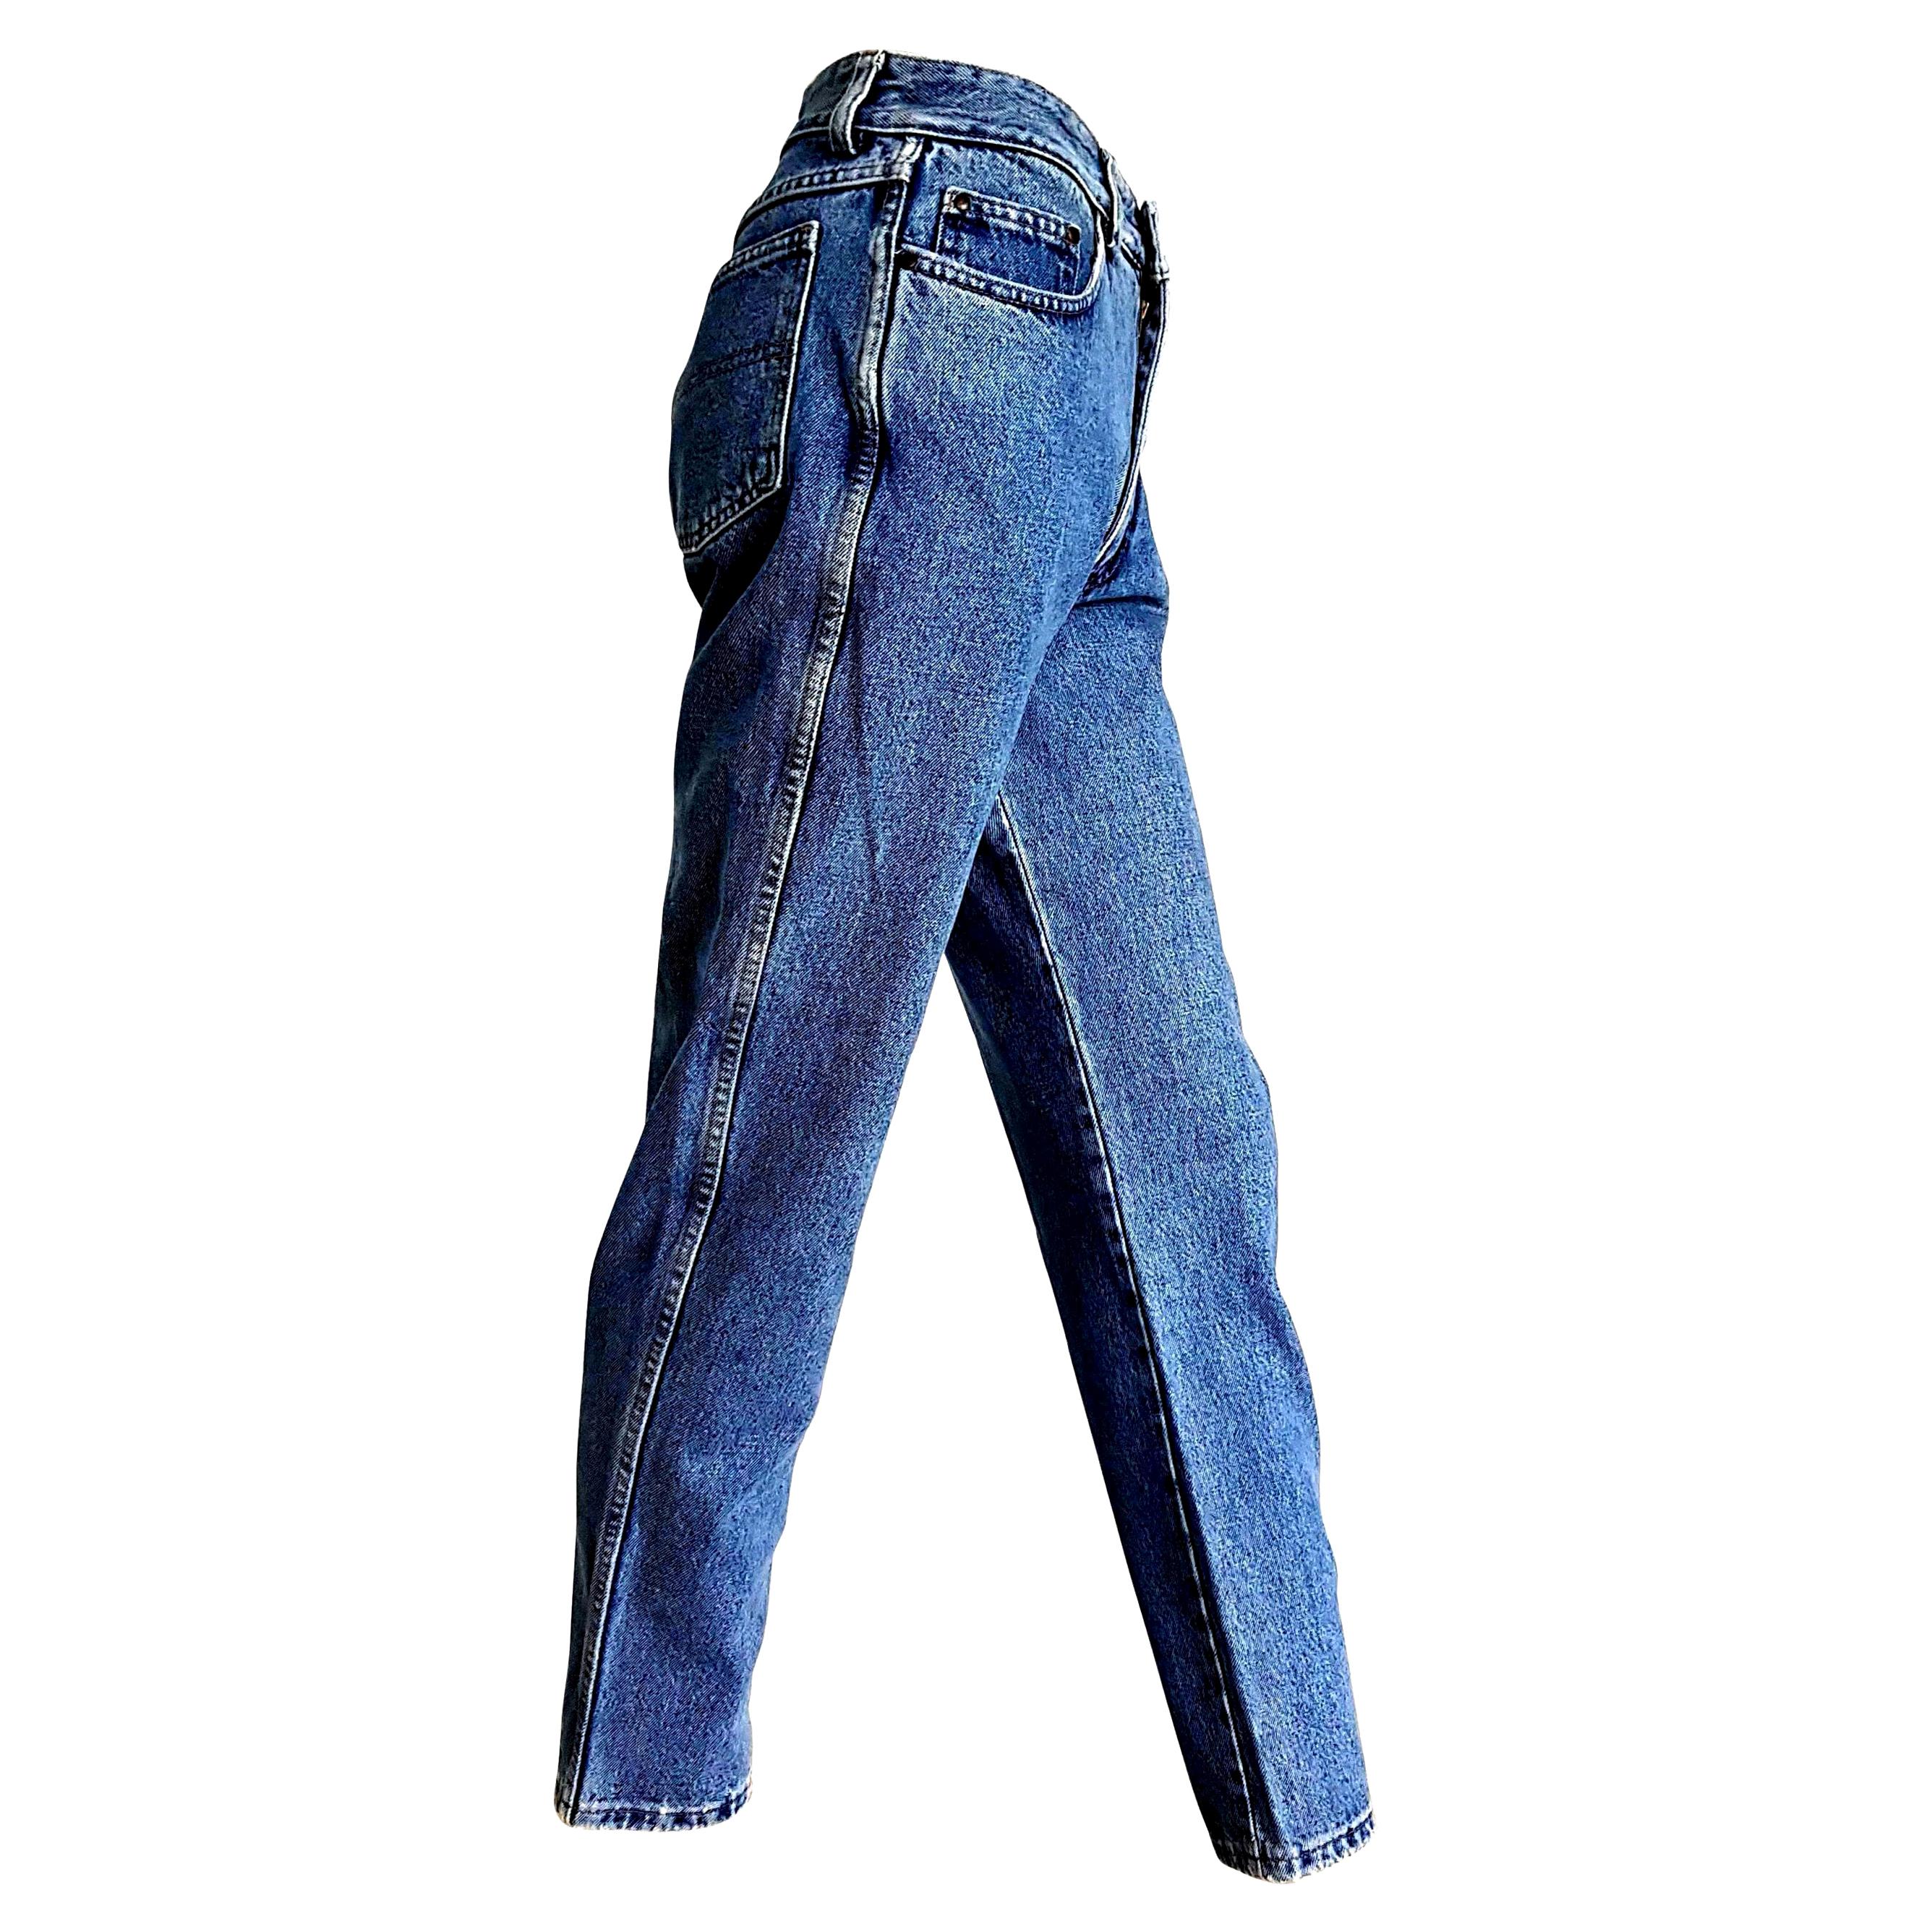 Katharine HAMNETT "New" Jeans for Collectors - Unworn For Sale